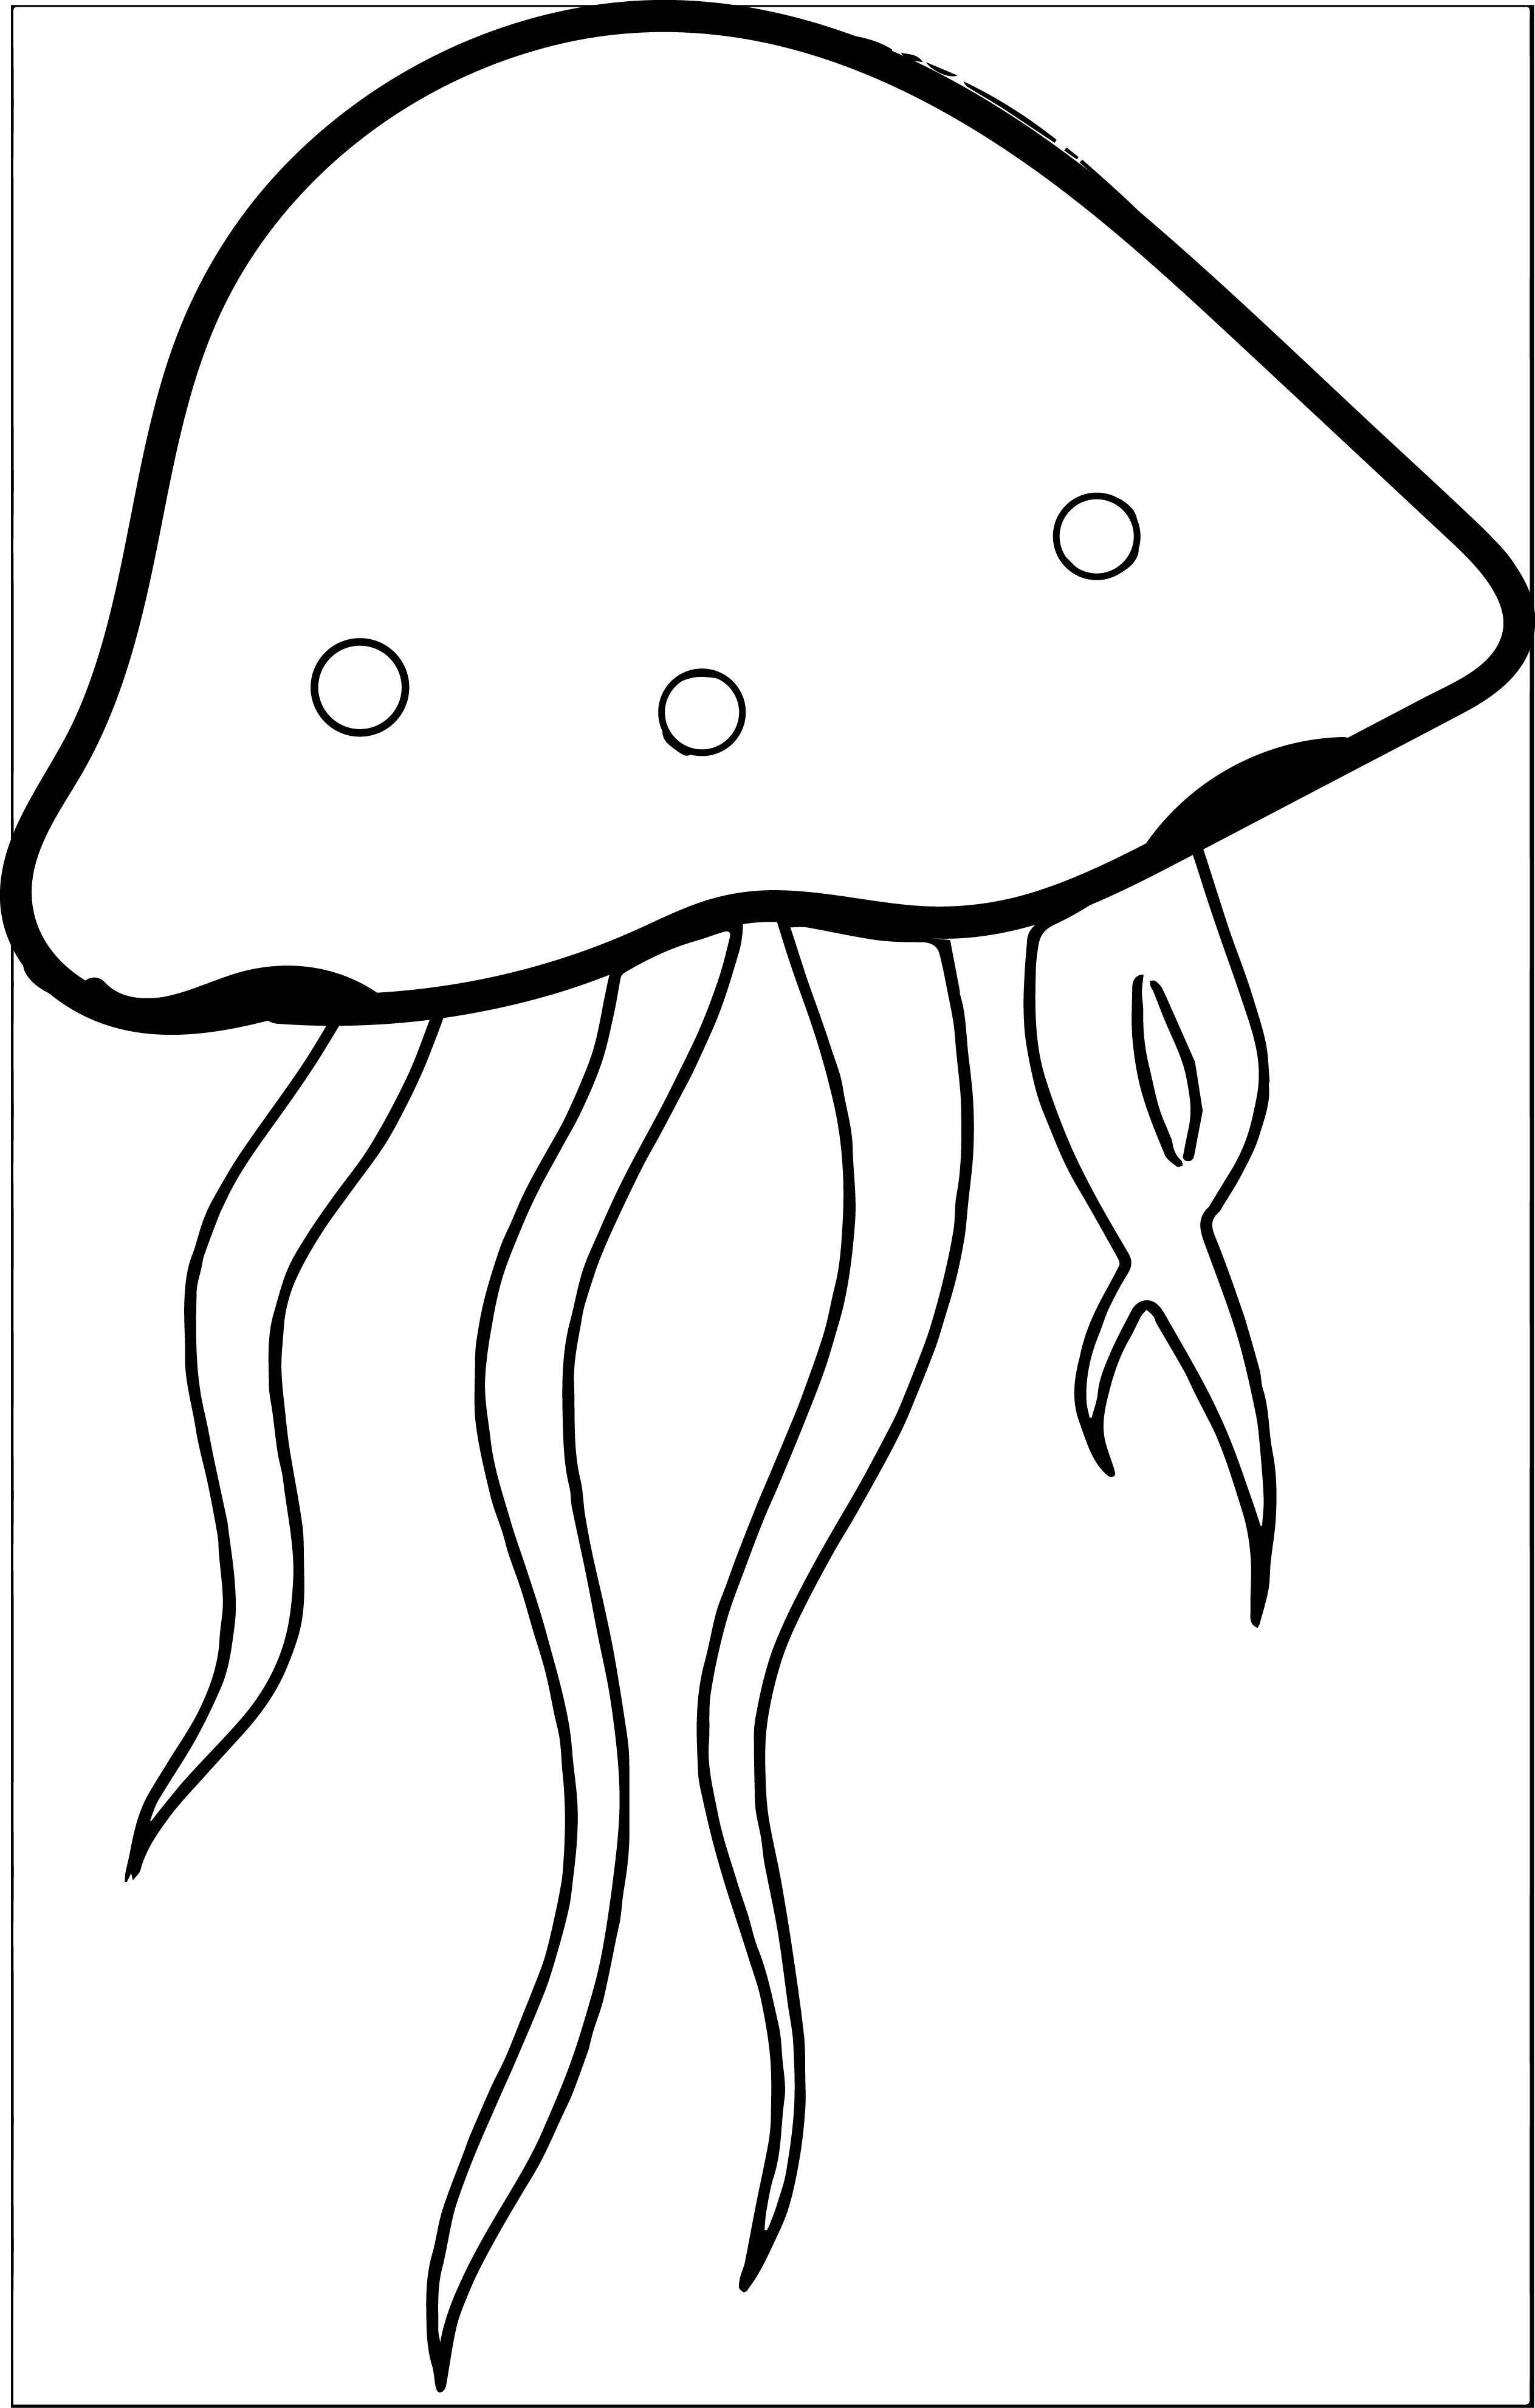 Jellyfish clipart black.